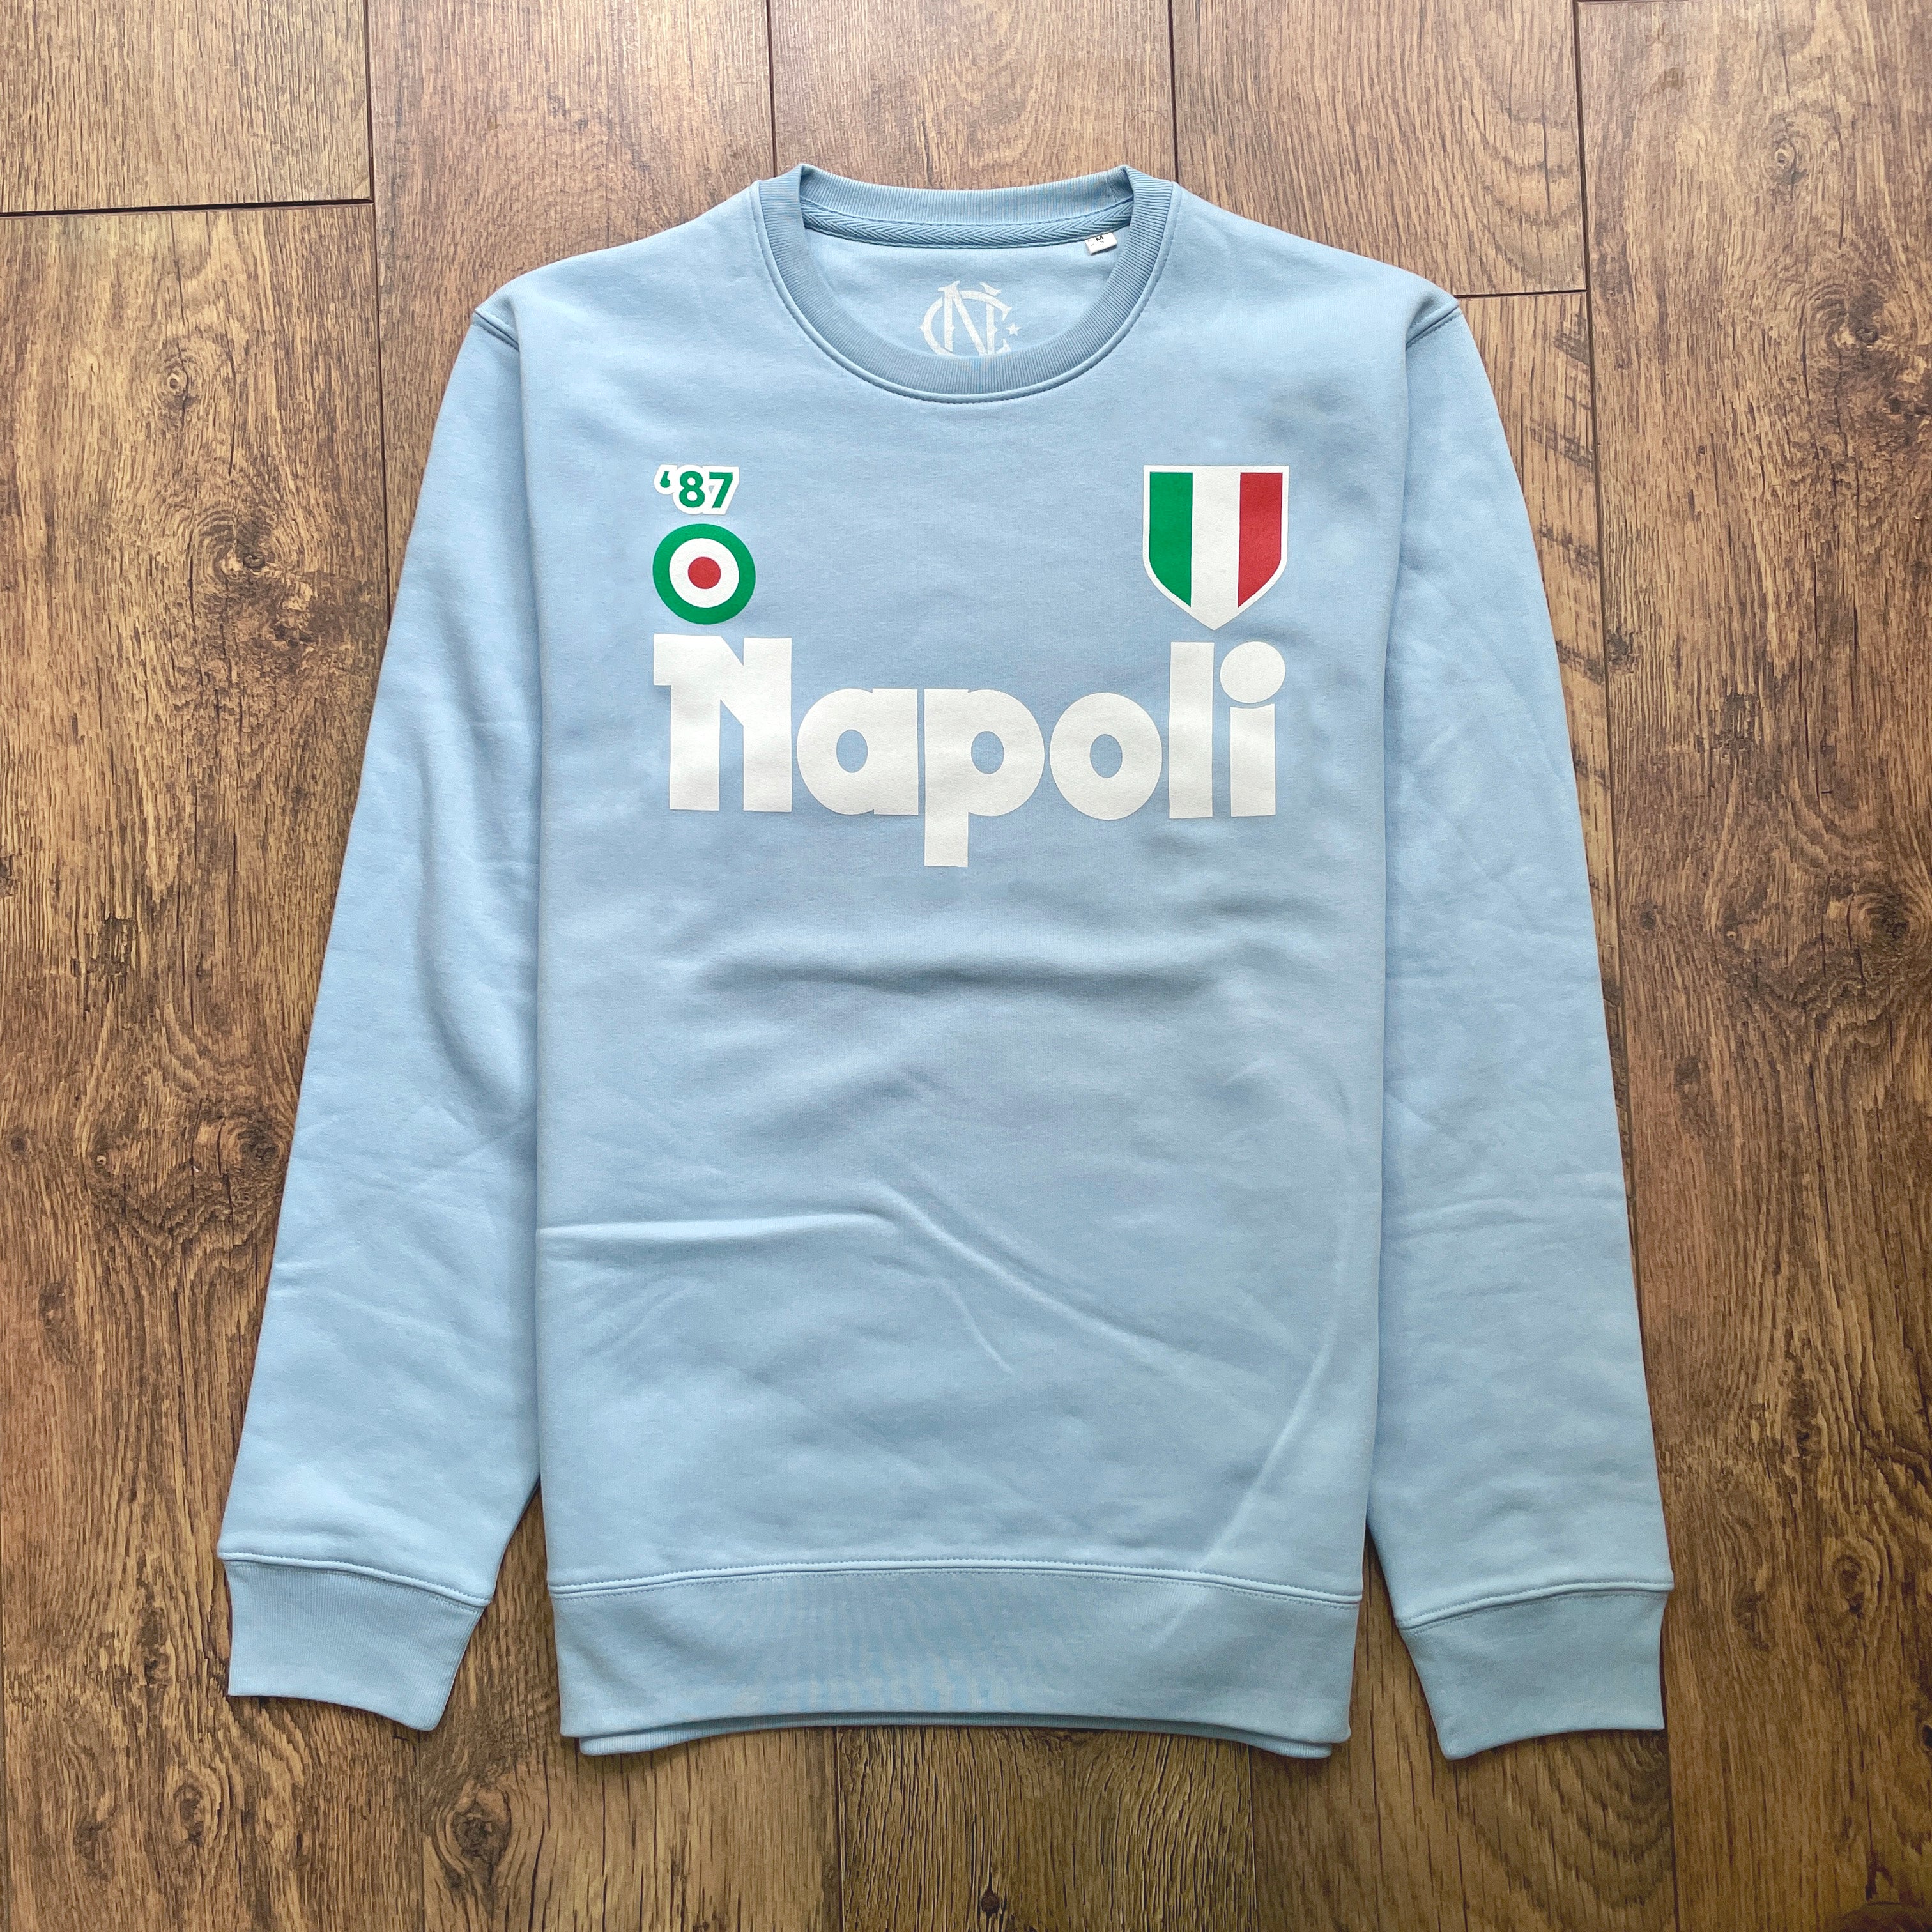 Napoli 1987 shirt t-shirt